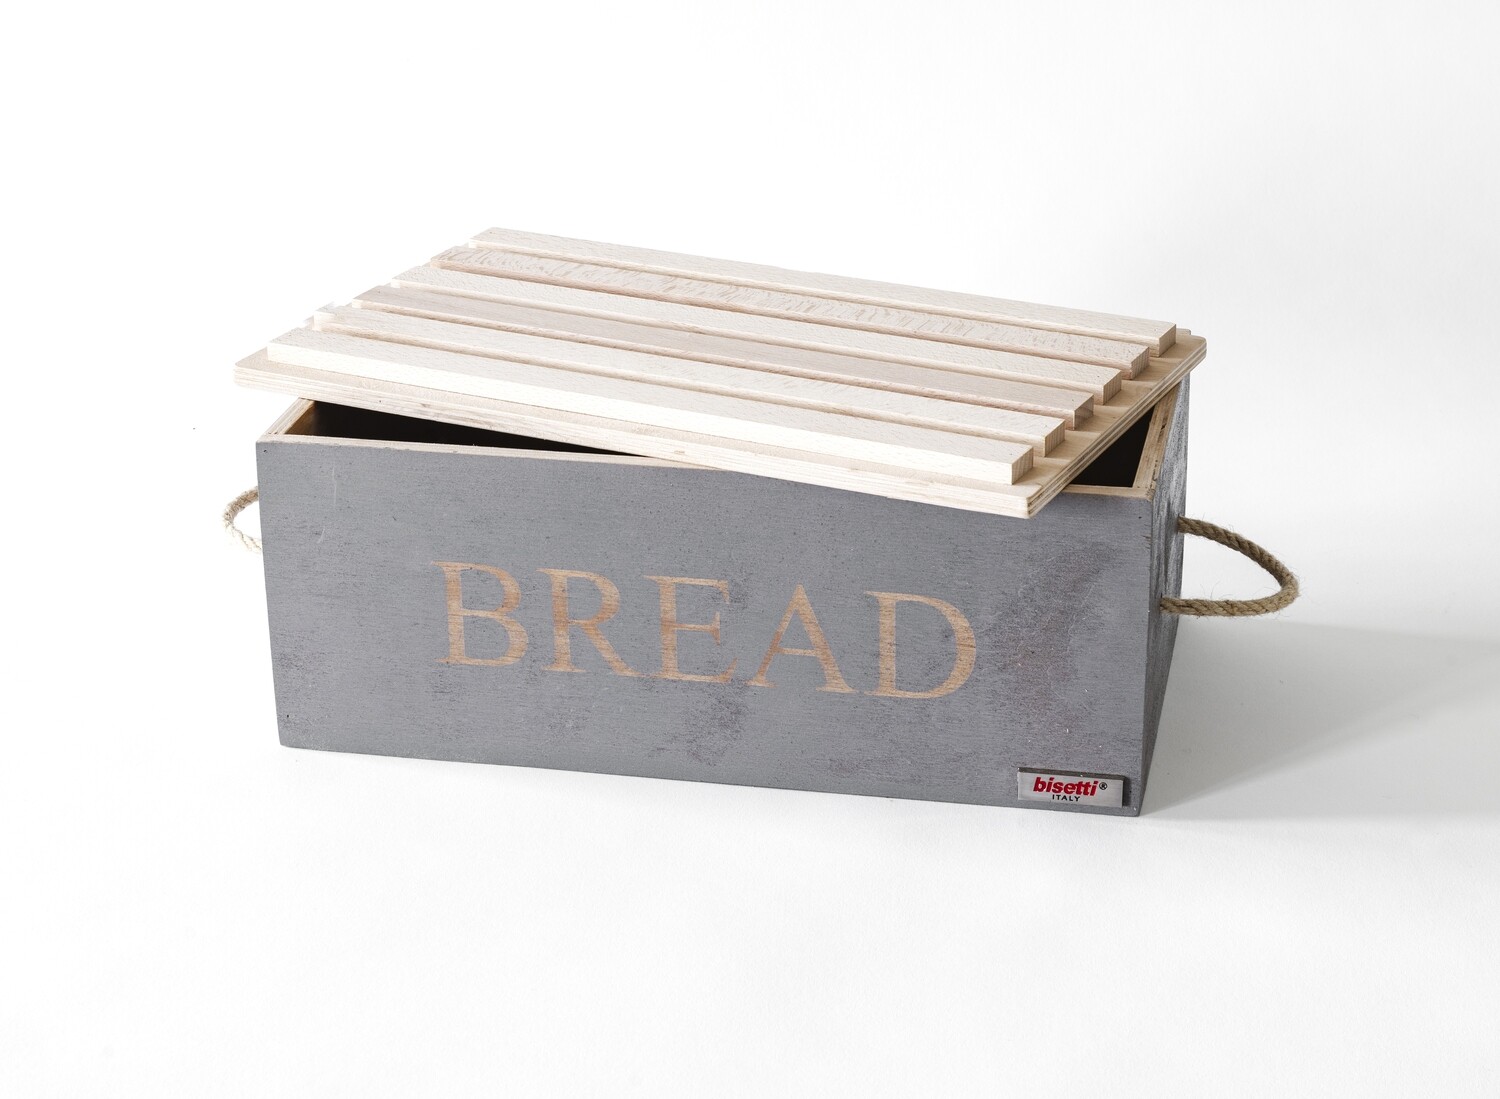 Breadbox with beech wood lid/cutting board "PIERRE GOURMET"